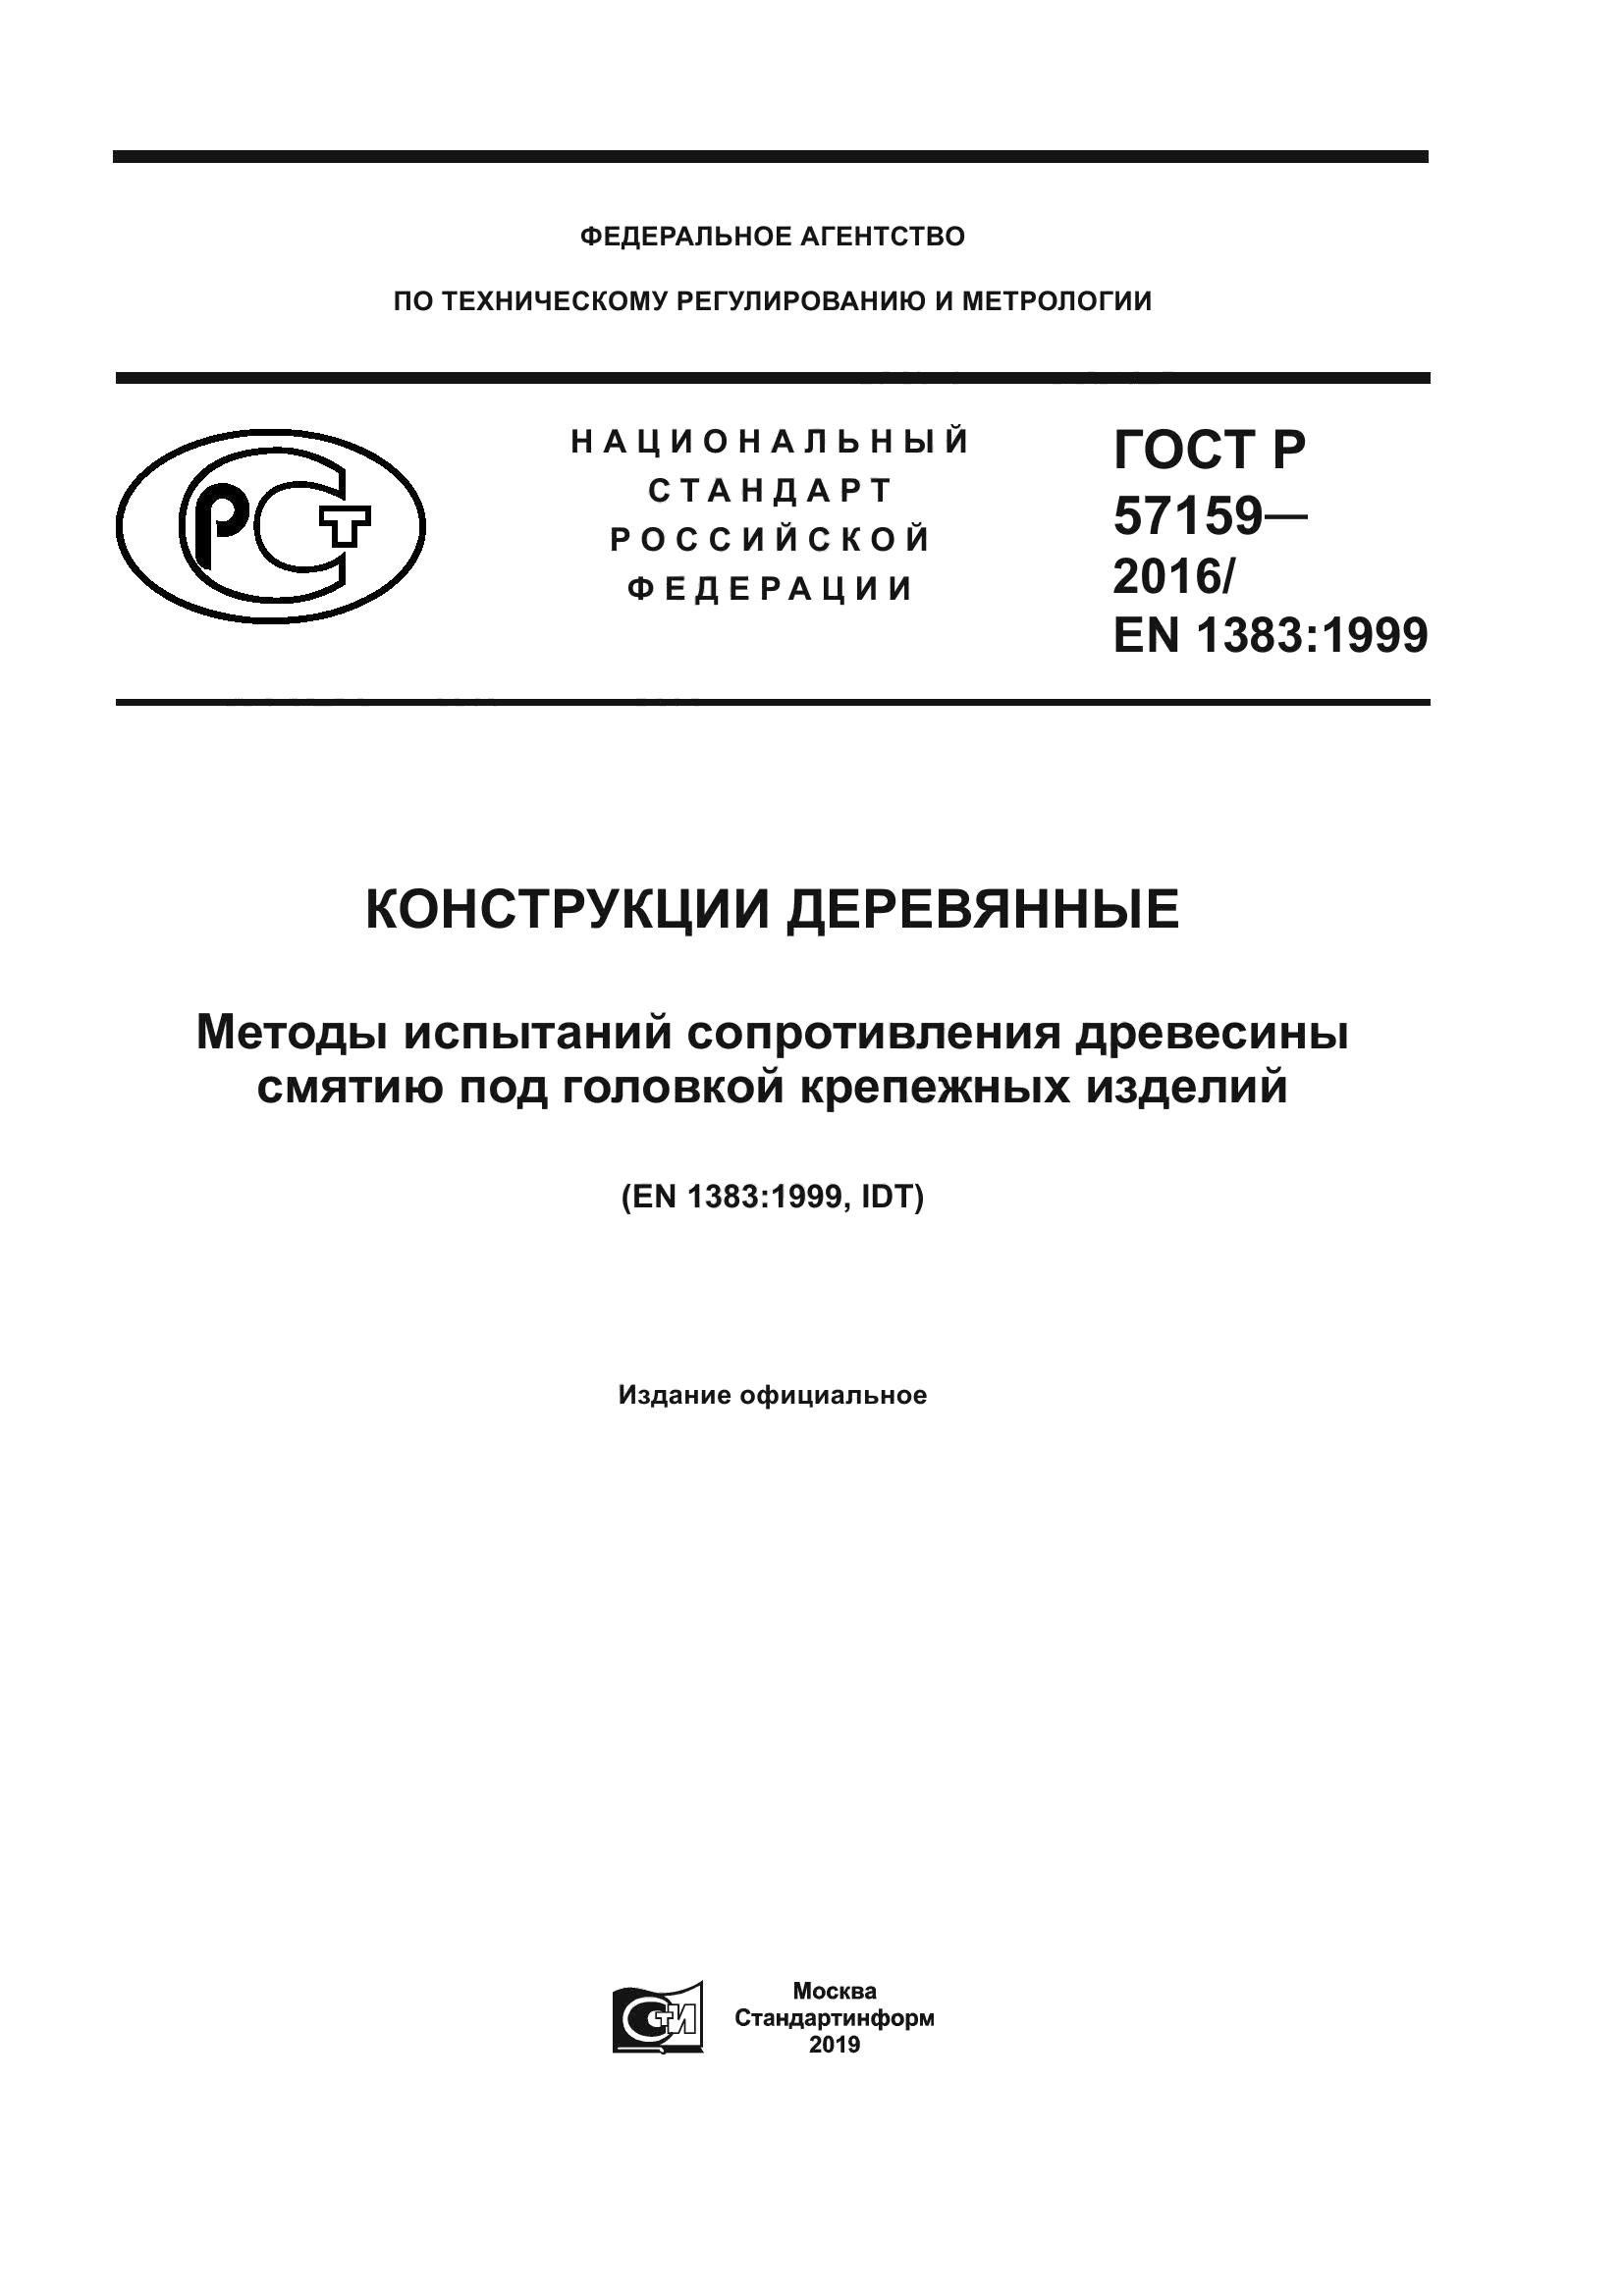 ГОСТ Р 57159-2016